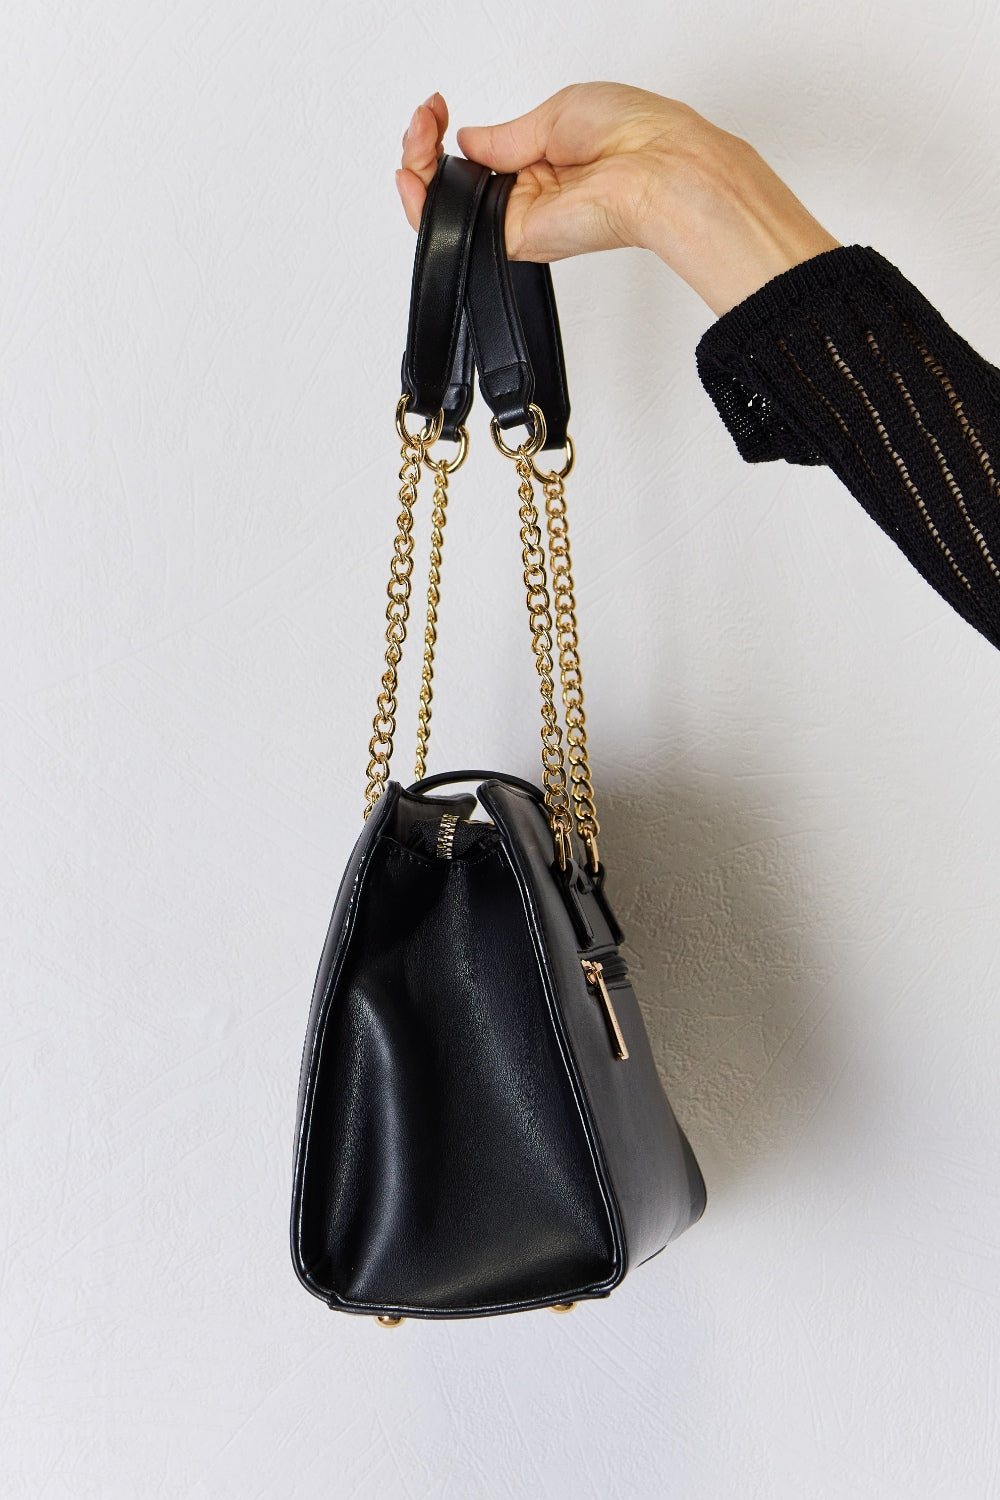 Black Quilted PU Leather Handbag